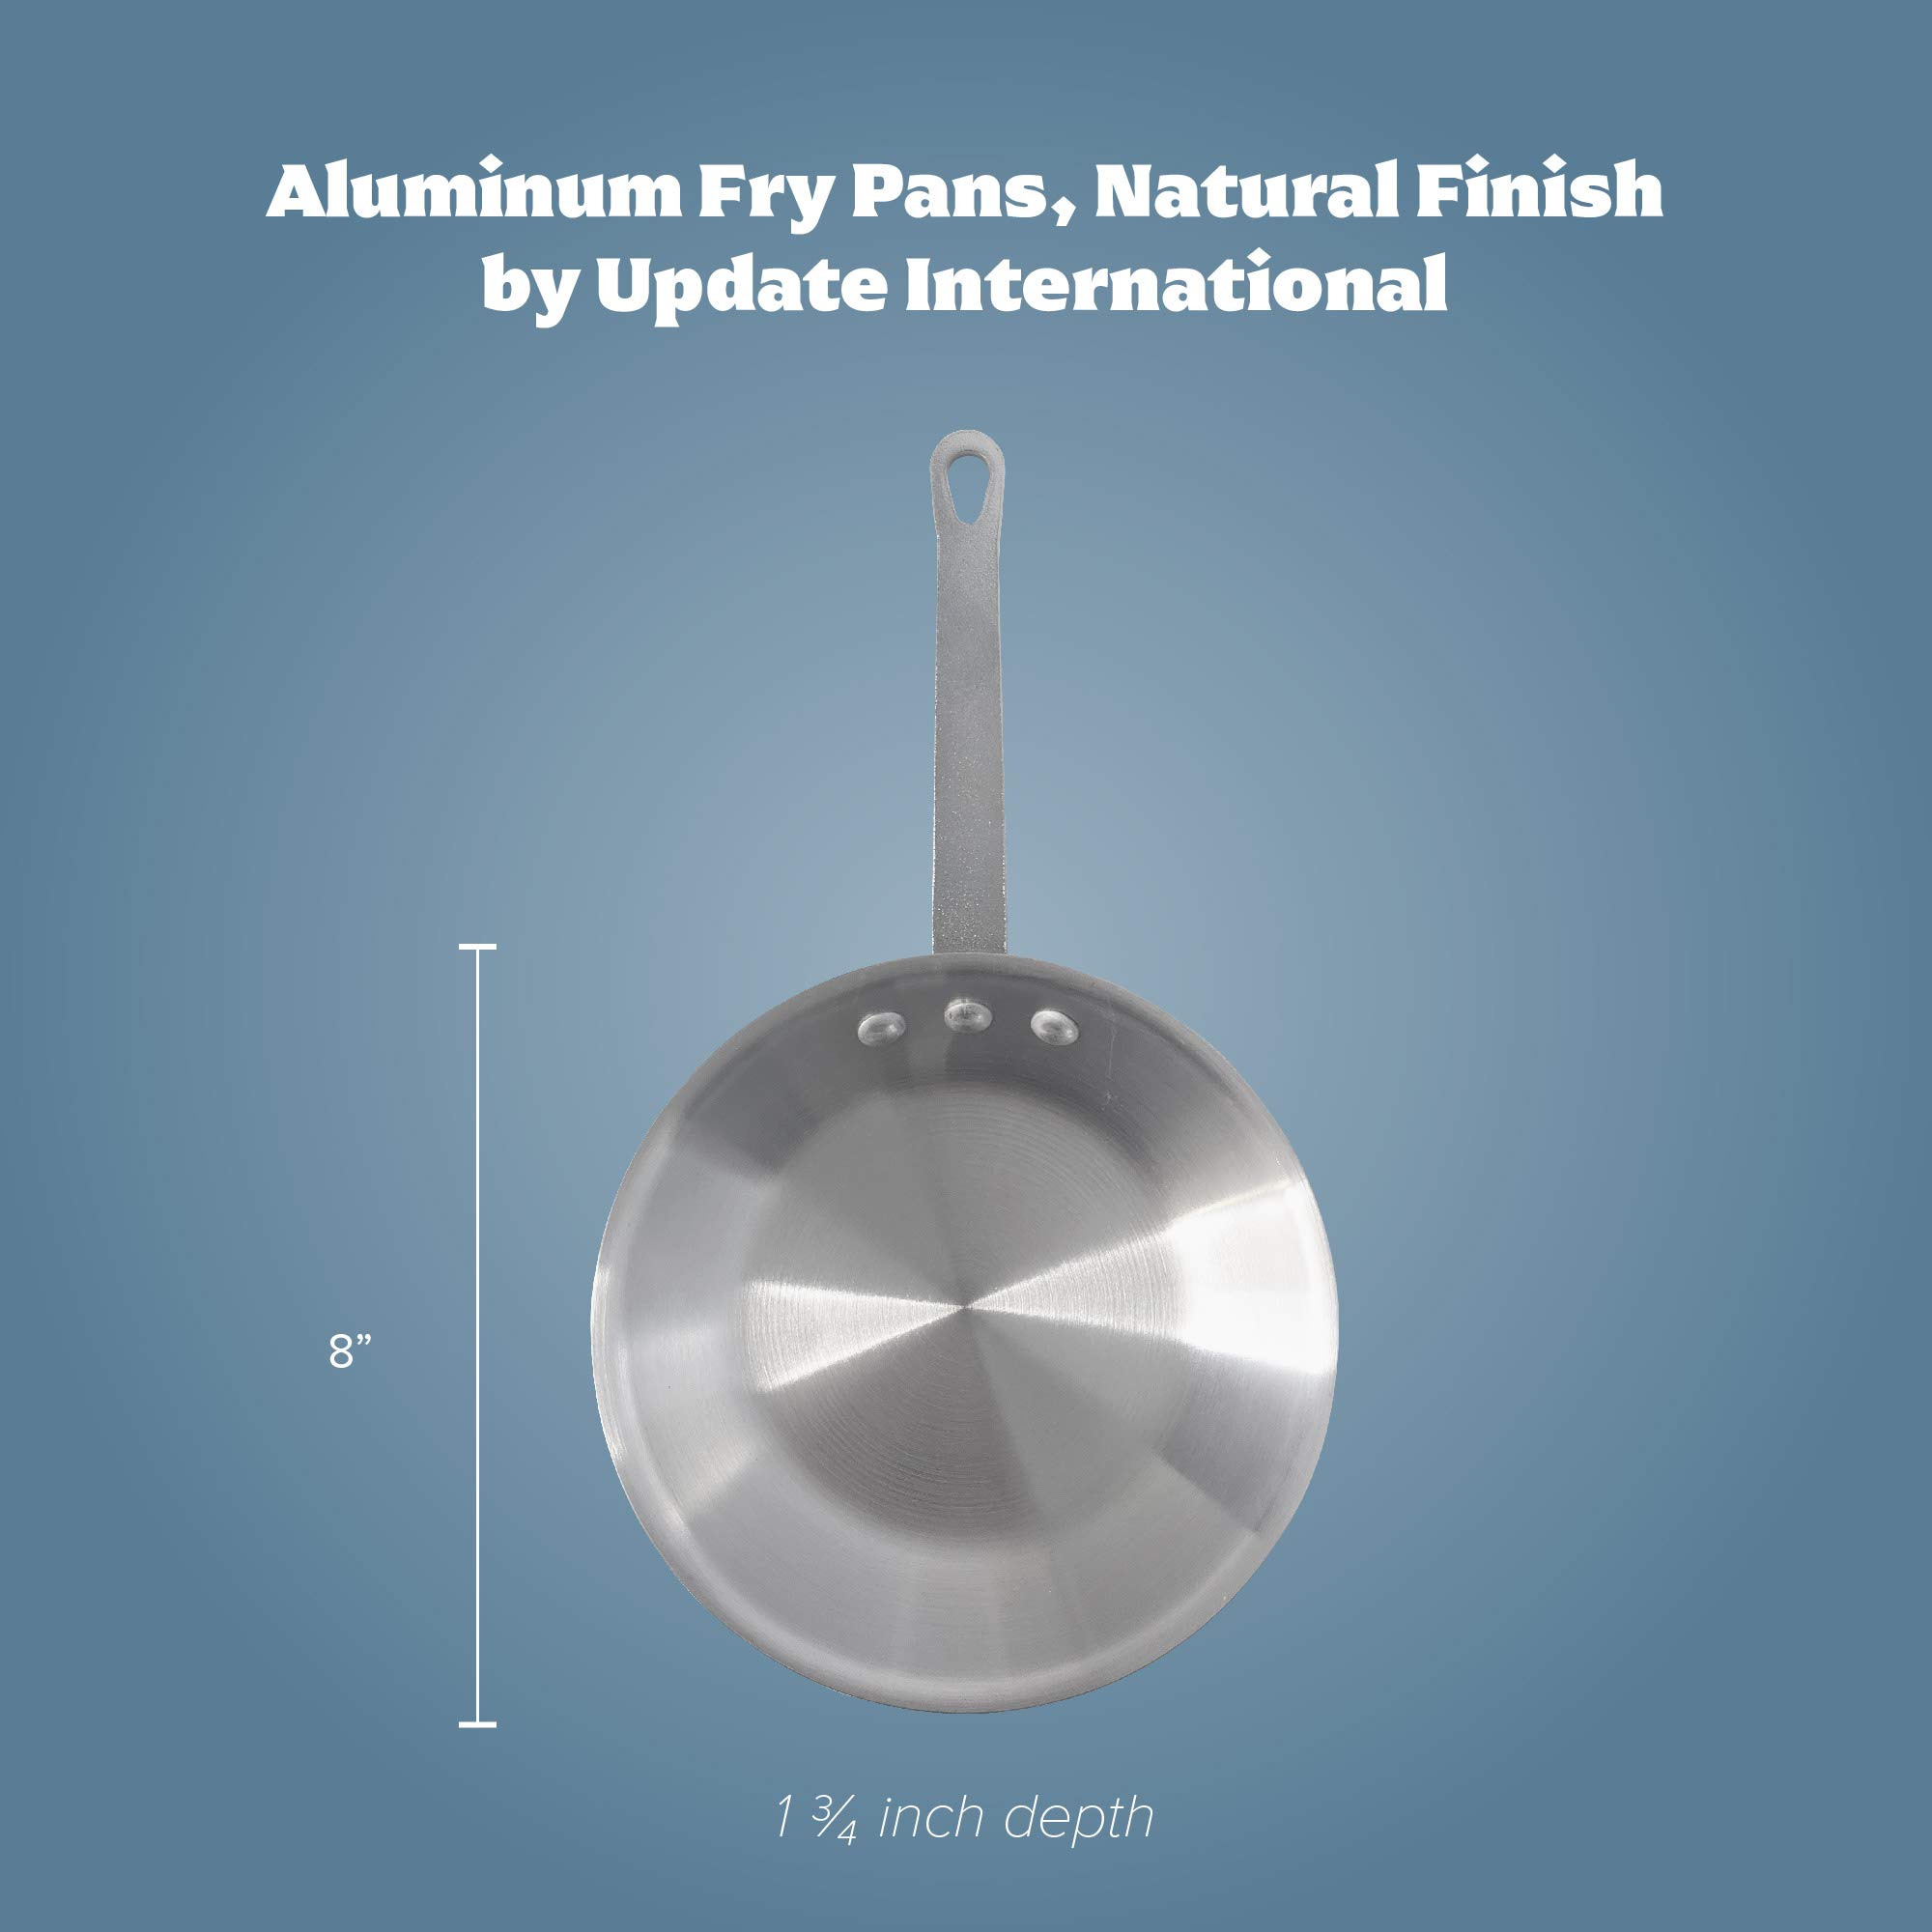 8 Inch Natural Finish Aluminum Frying Pan, Fry Pan, Commercial Grade - NSF Certified